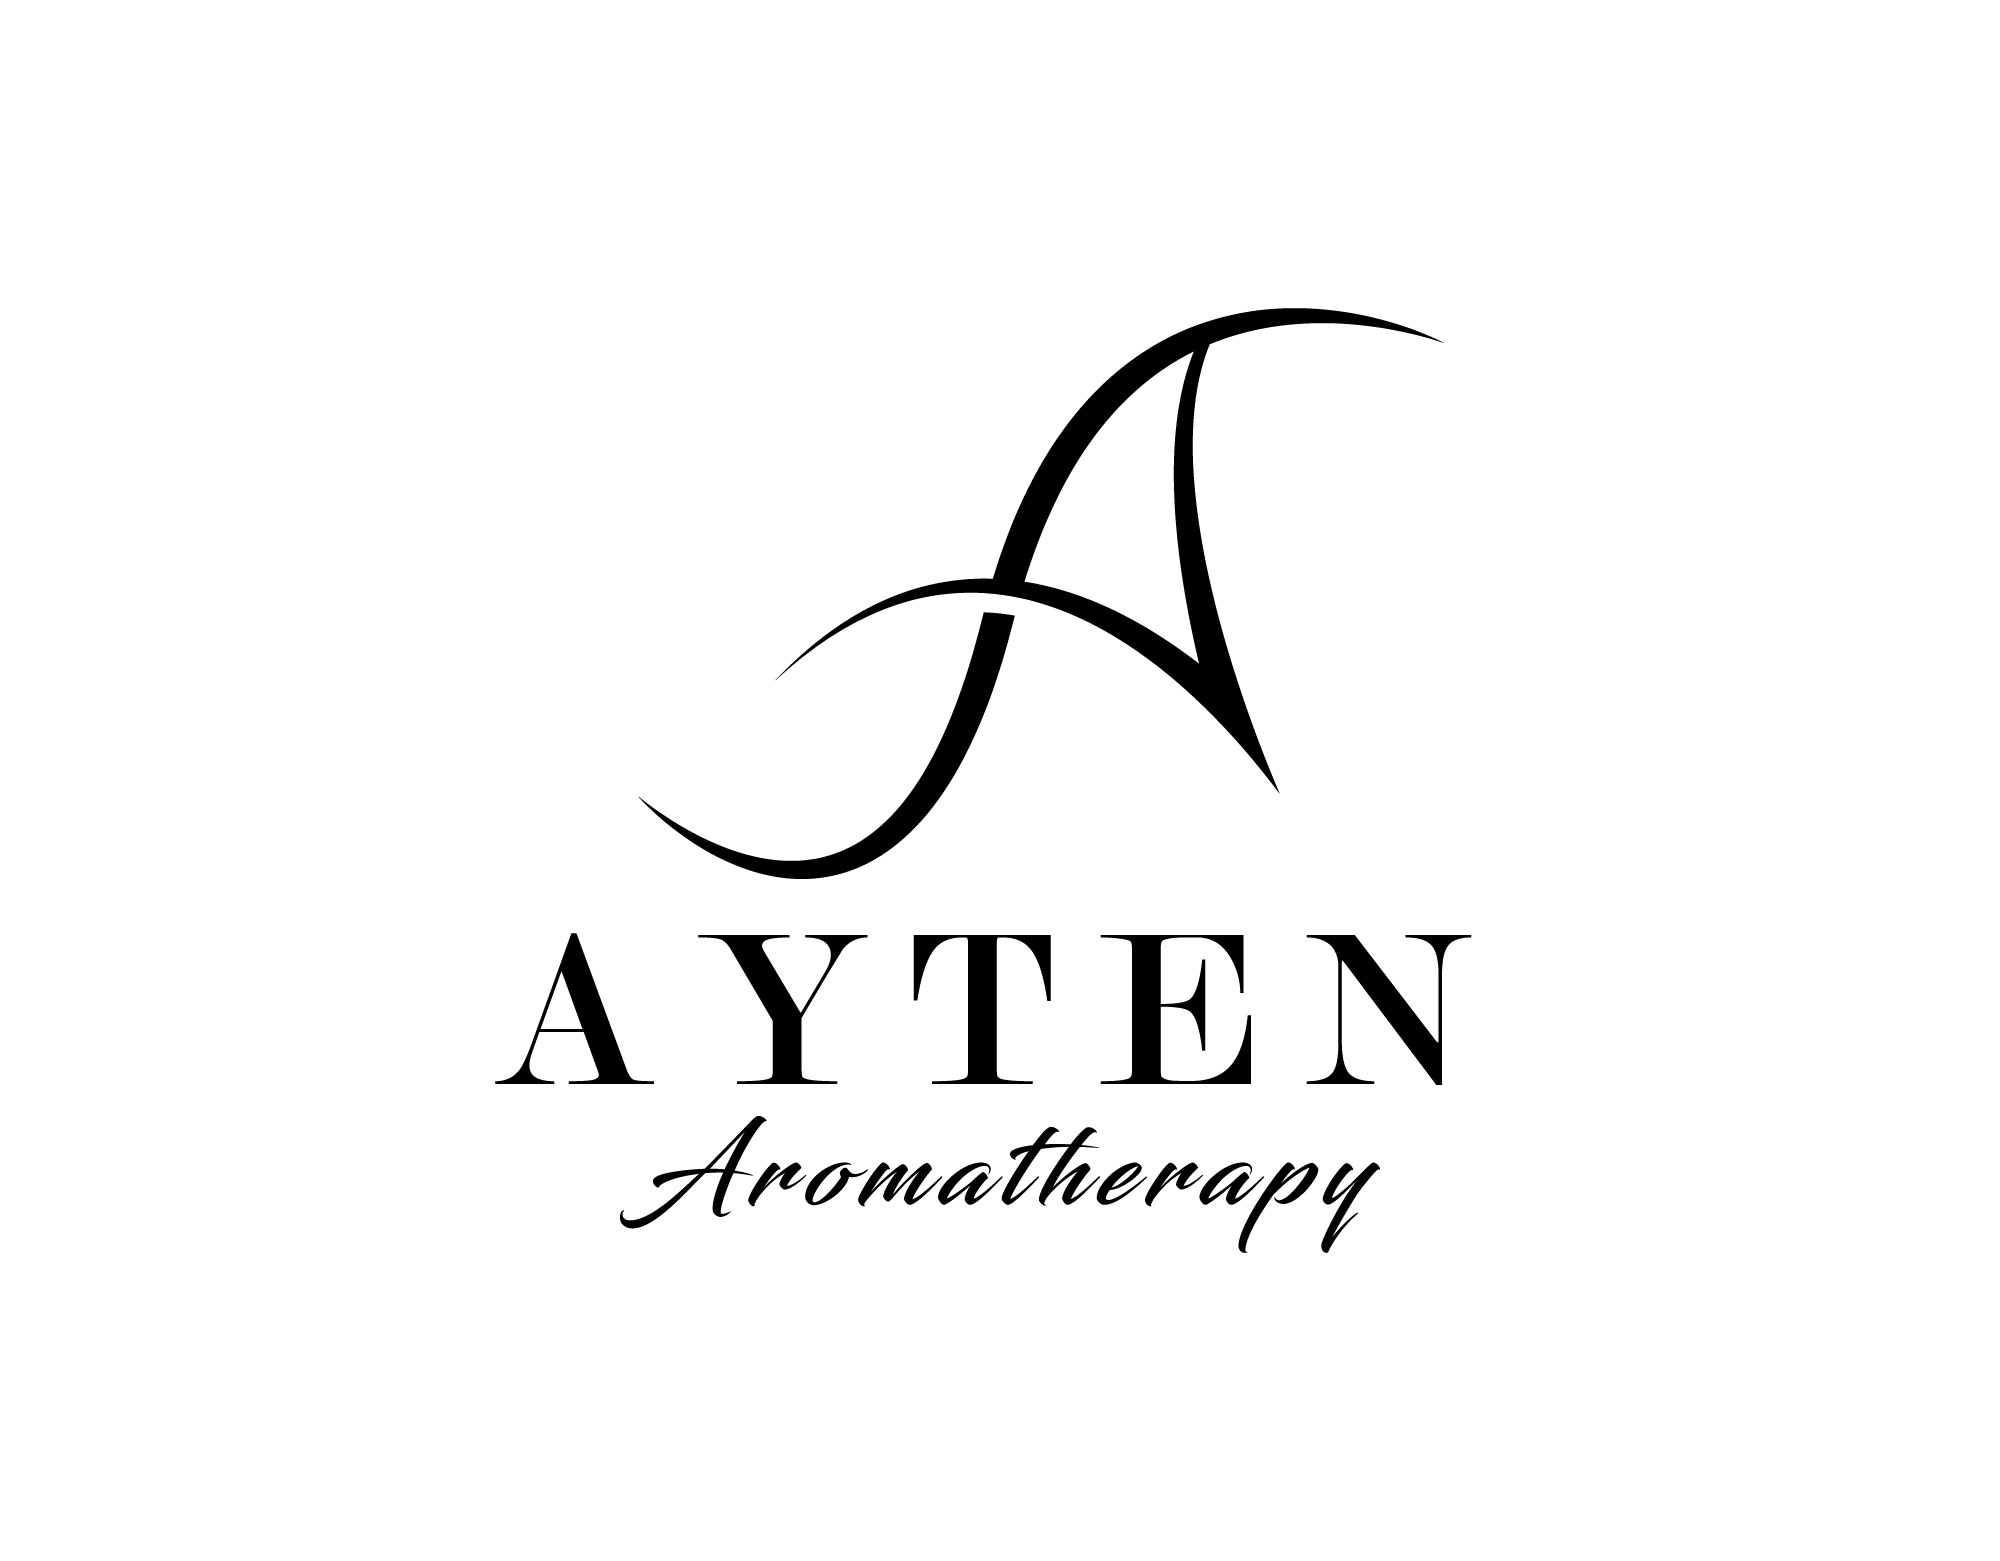 Ayten Aromatherapy